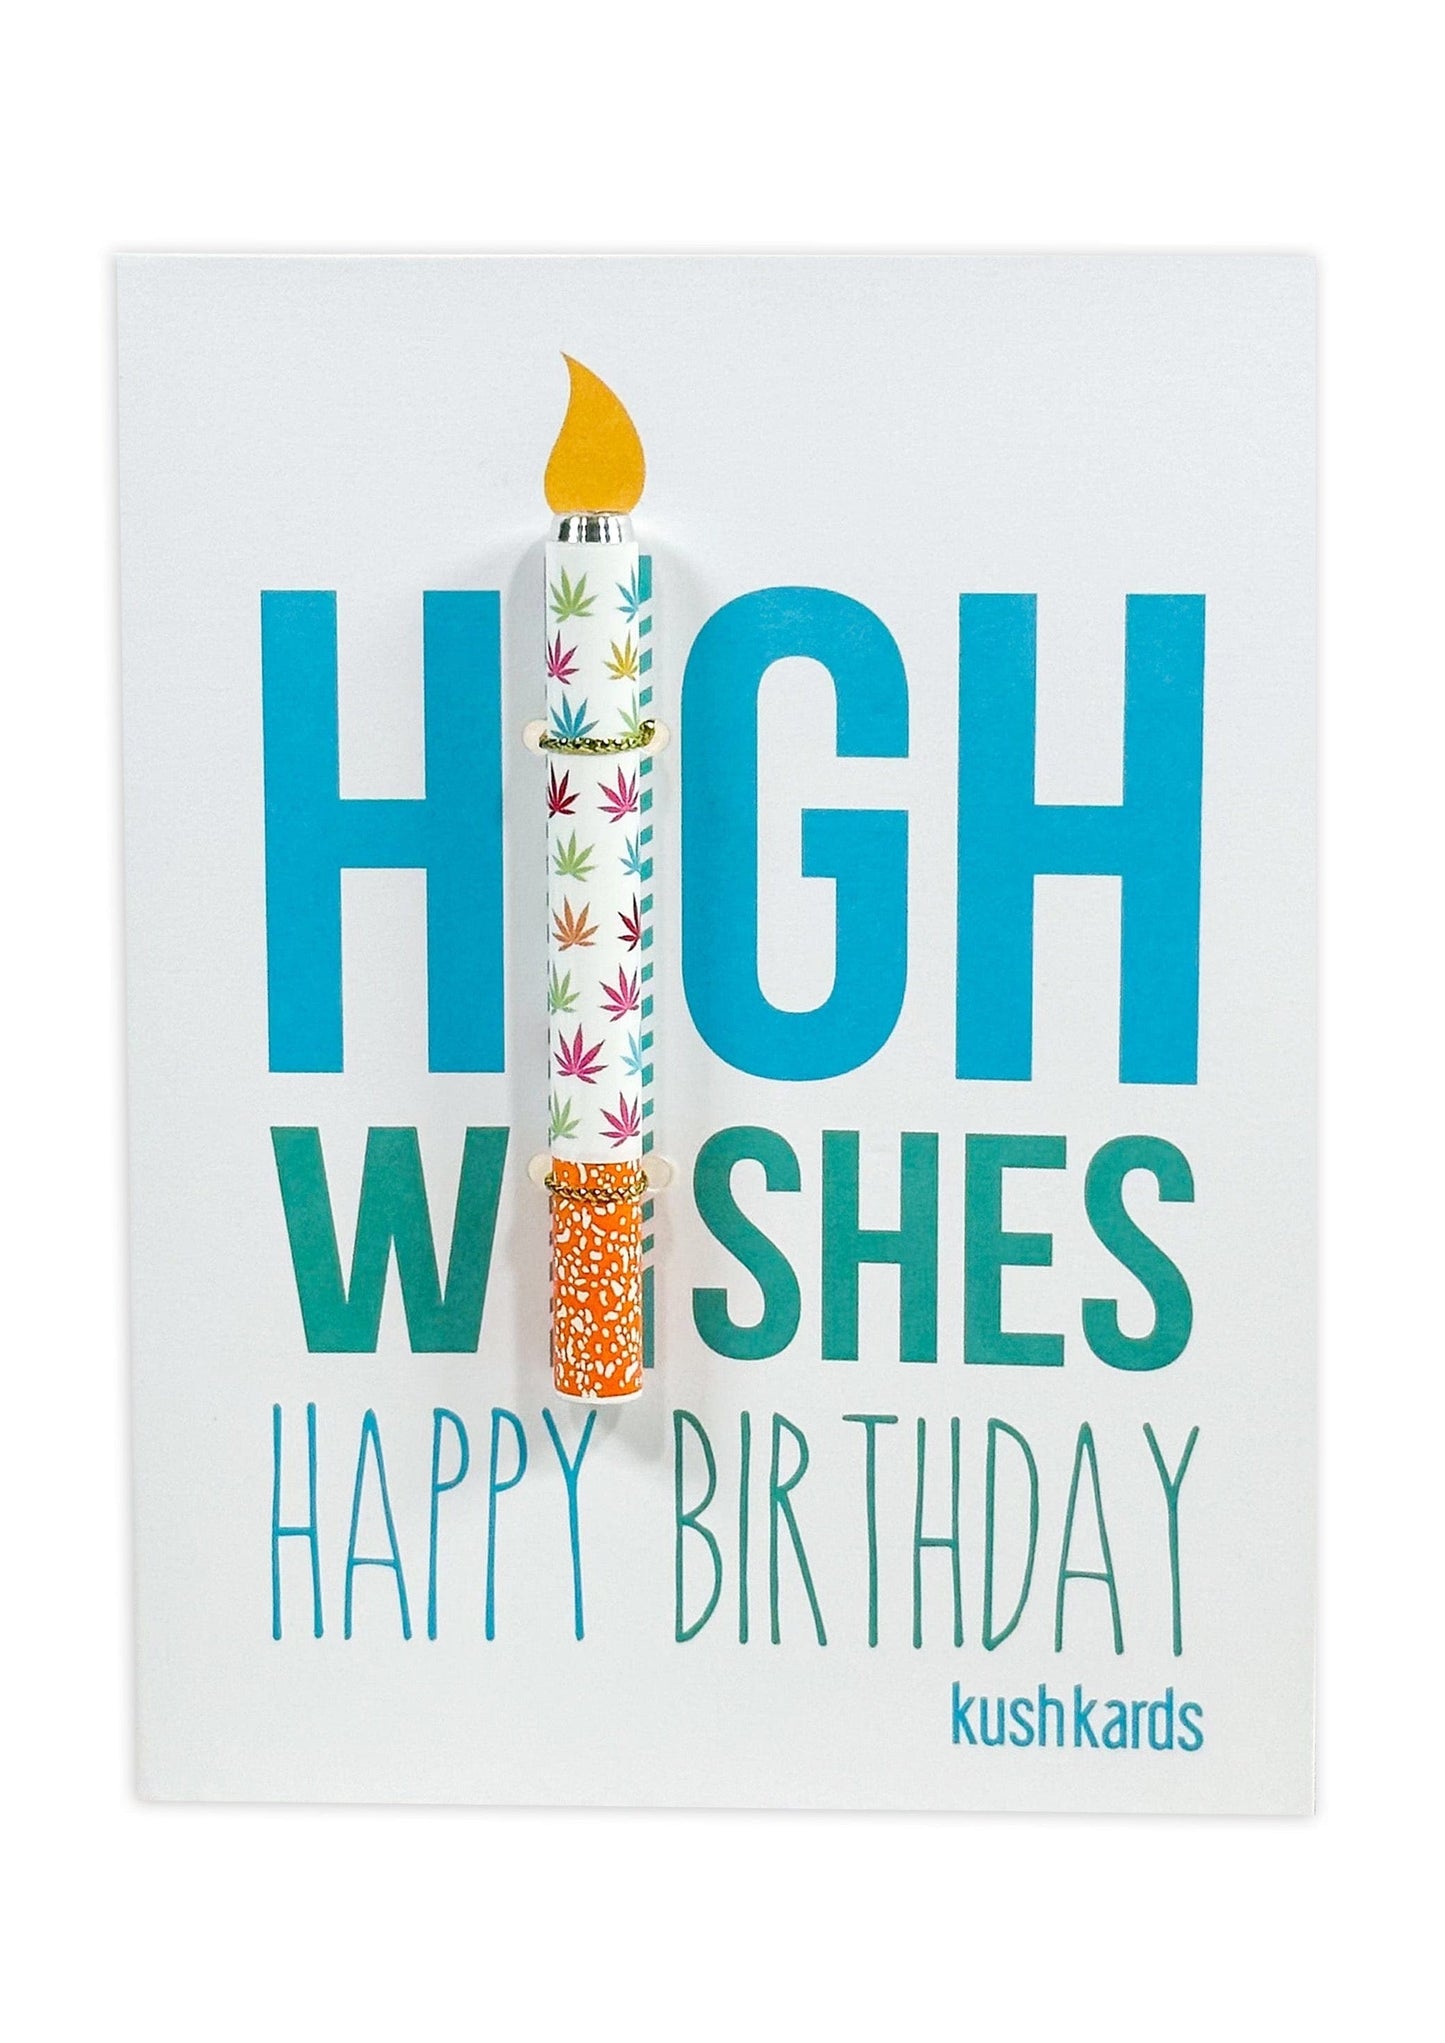 KushKards Greeting Cards One Hitter Kard 🎉 High Wishes Birthday Cannabis Greeting Card